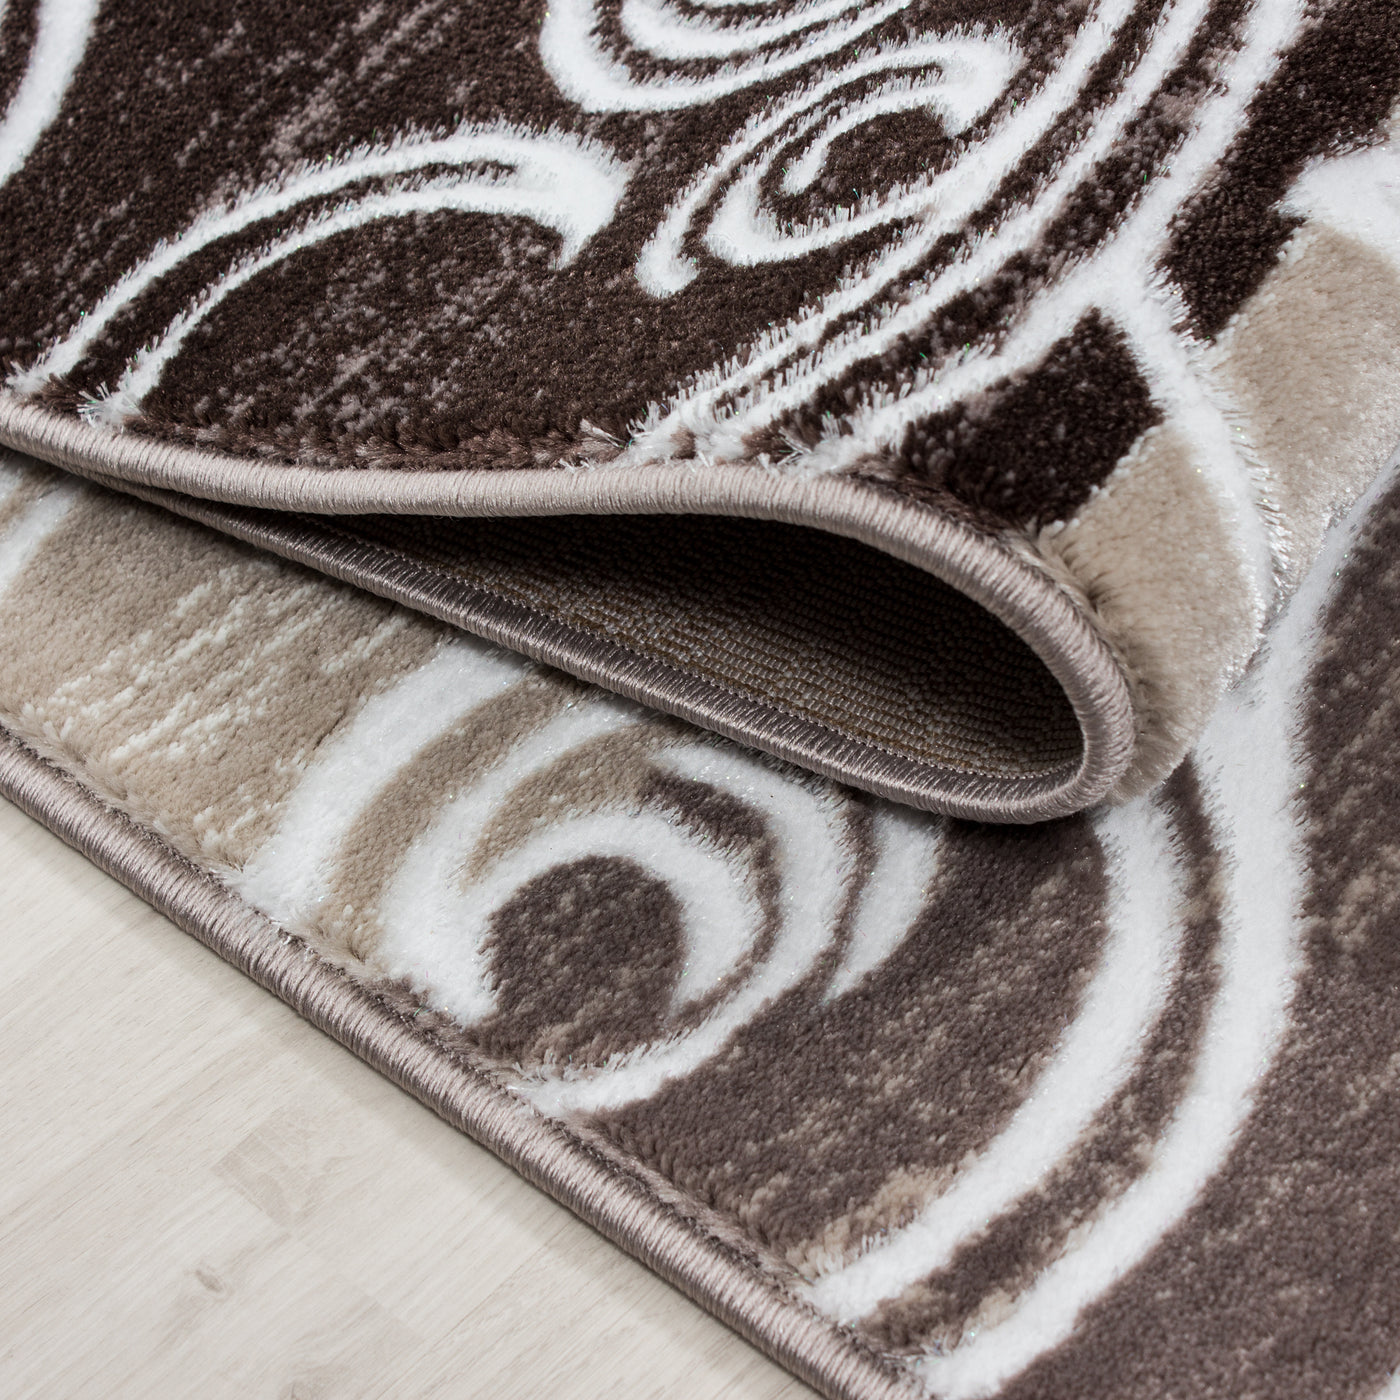 Kurzflor Teppich Patchwork Design Optik Tribal Muster Grau Braun Beige Meliert